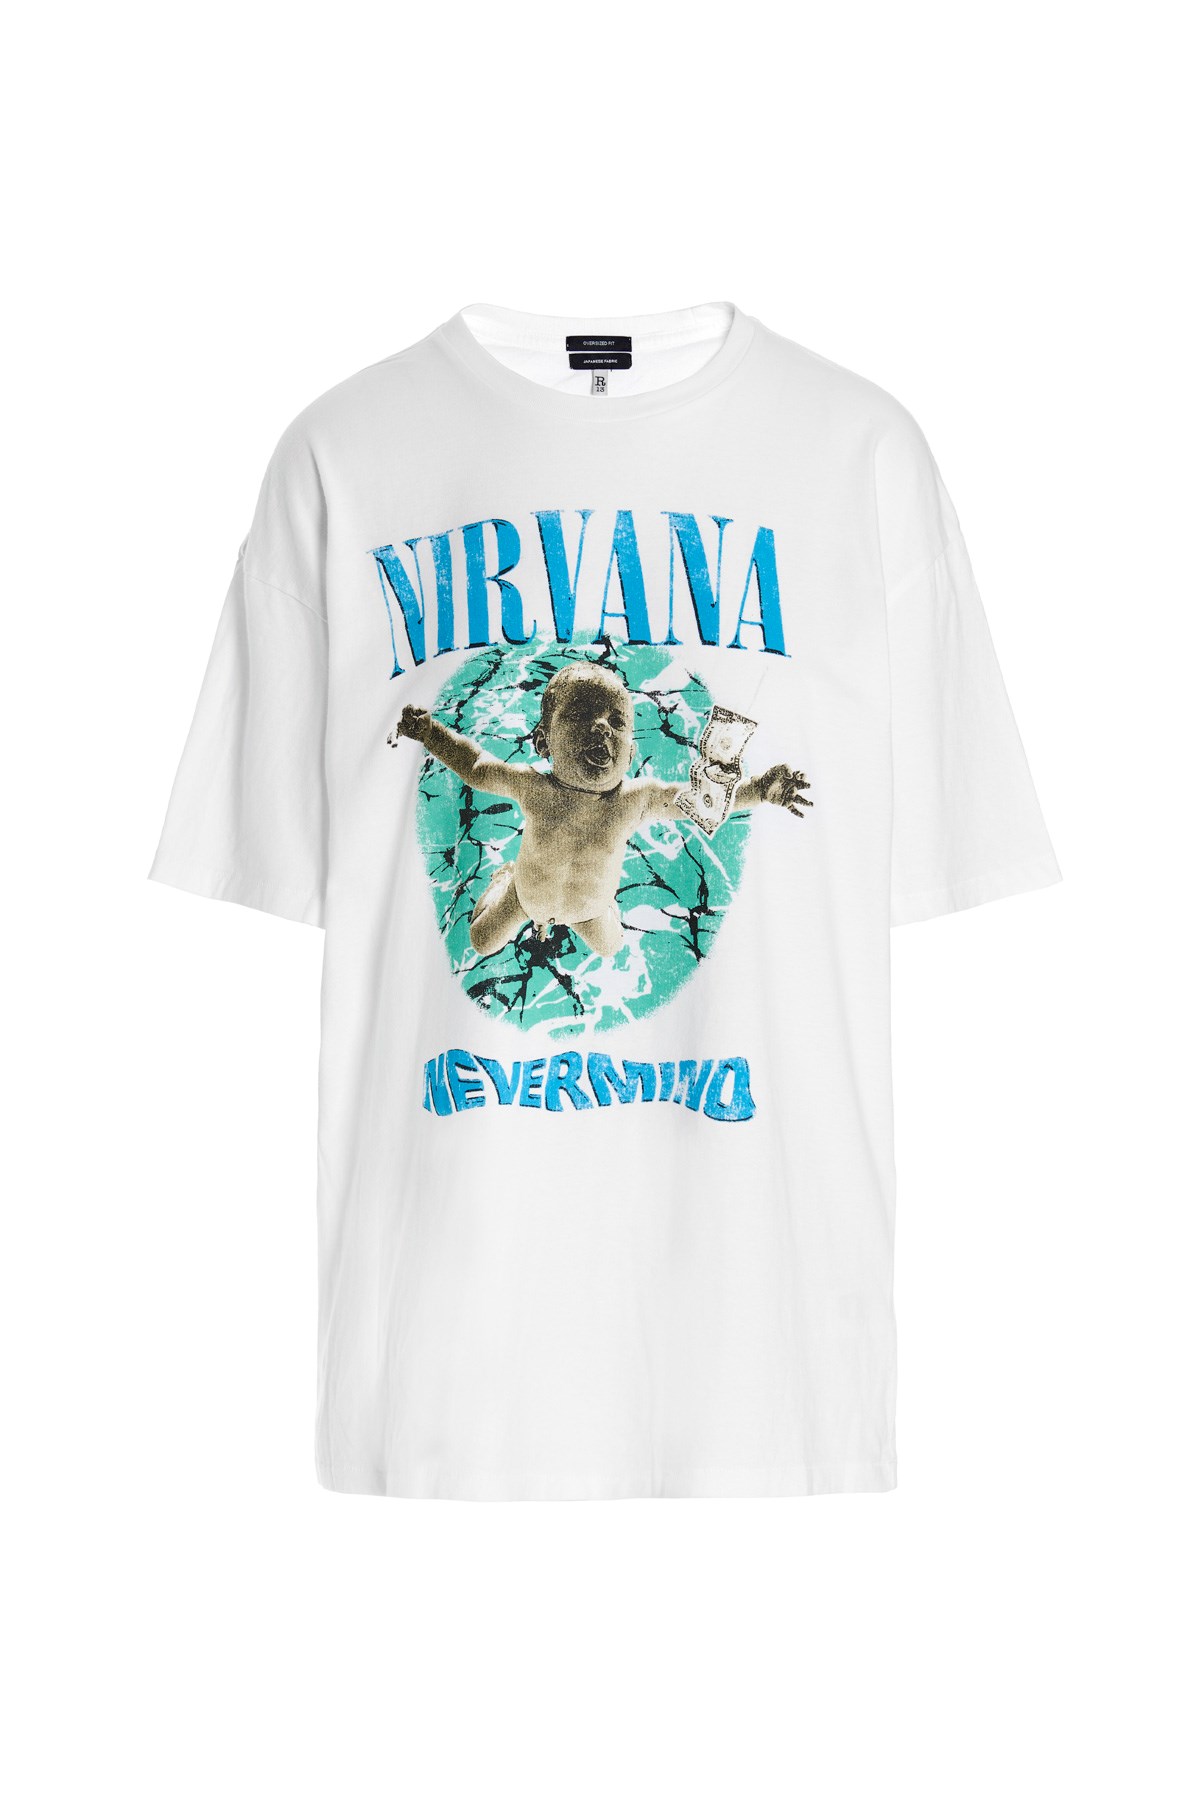 R13 'Nirvana Nevermind Album Cover’ T-Shirt